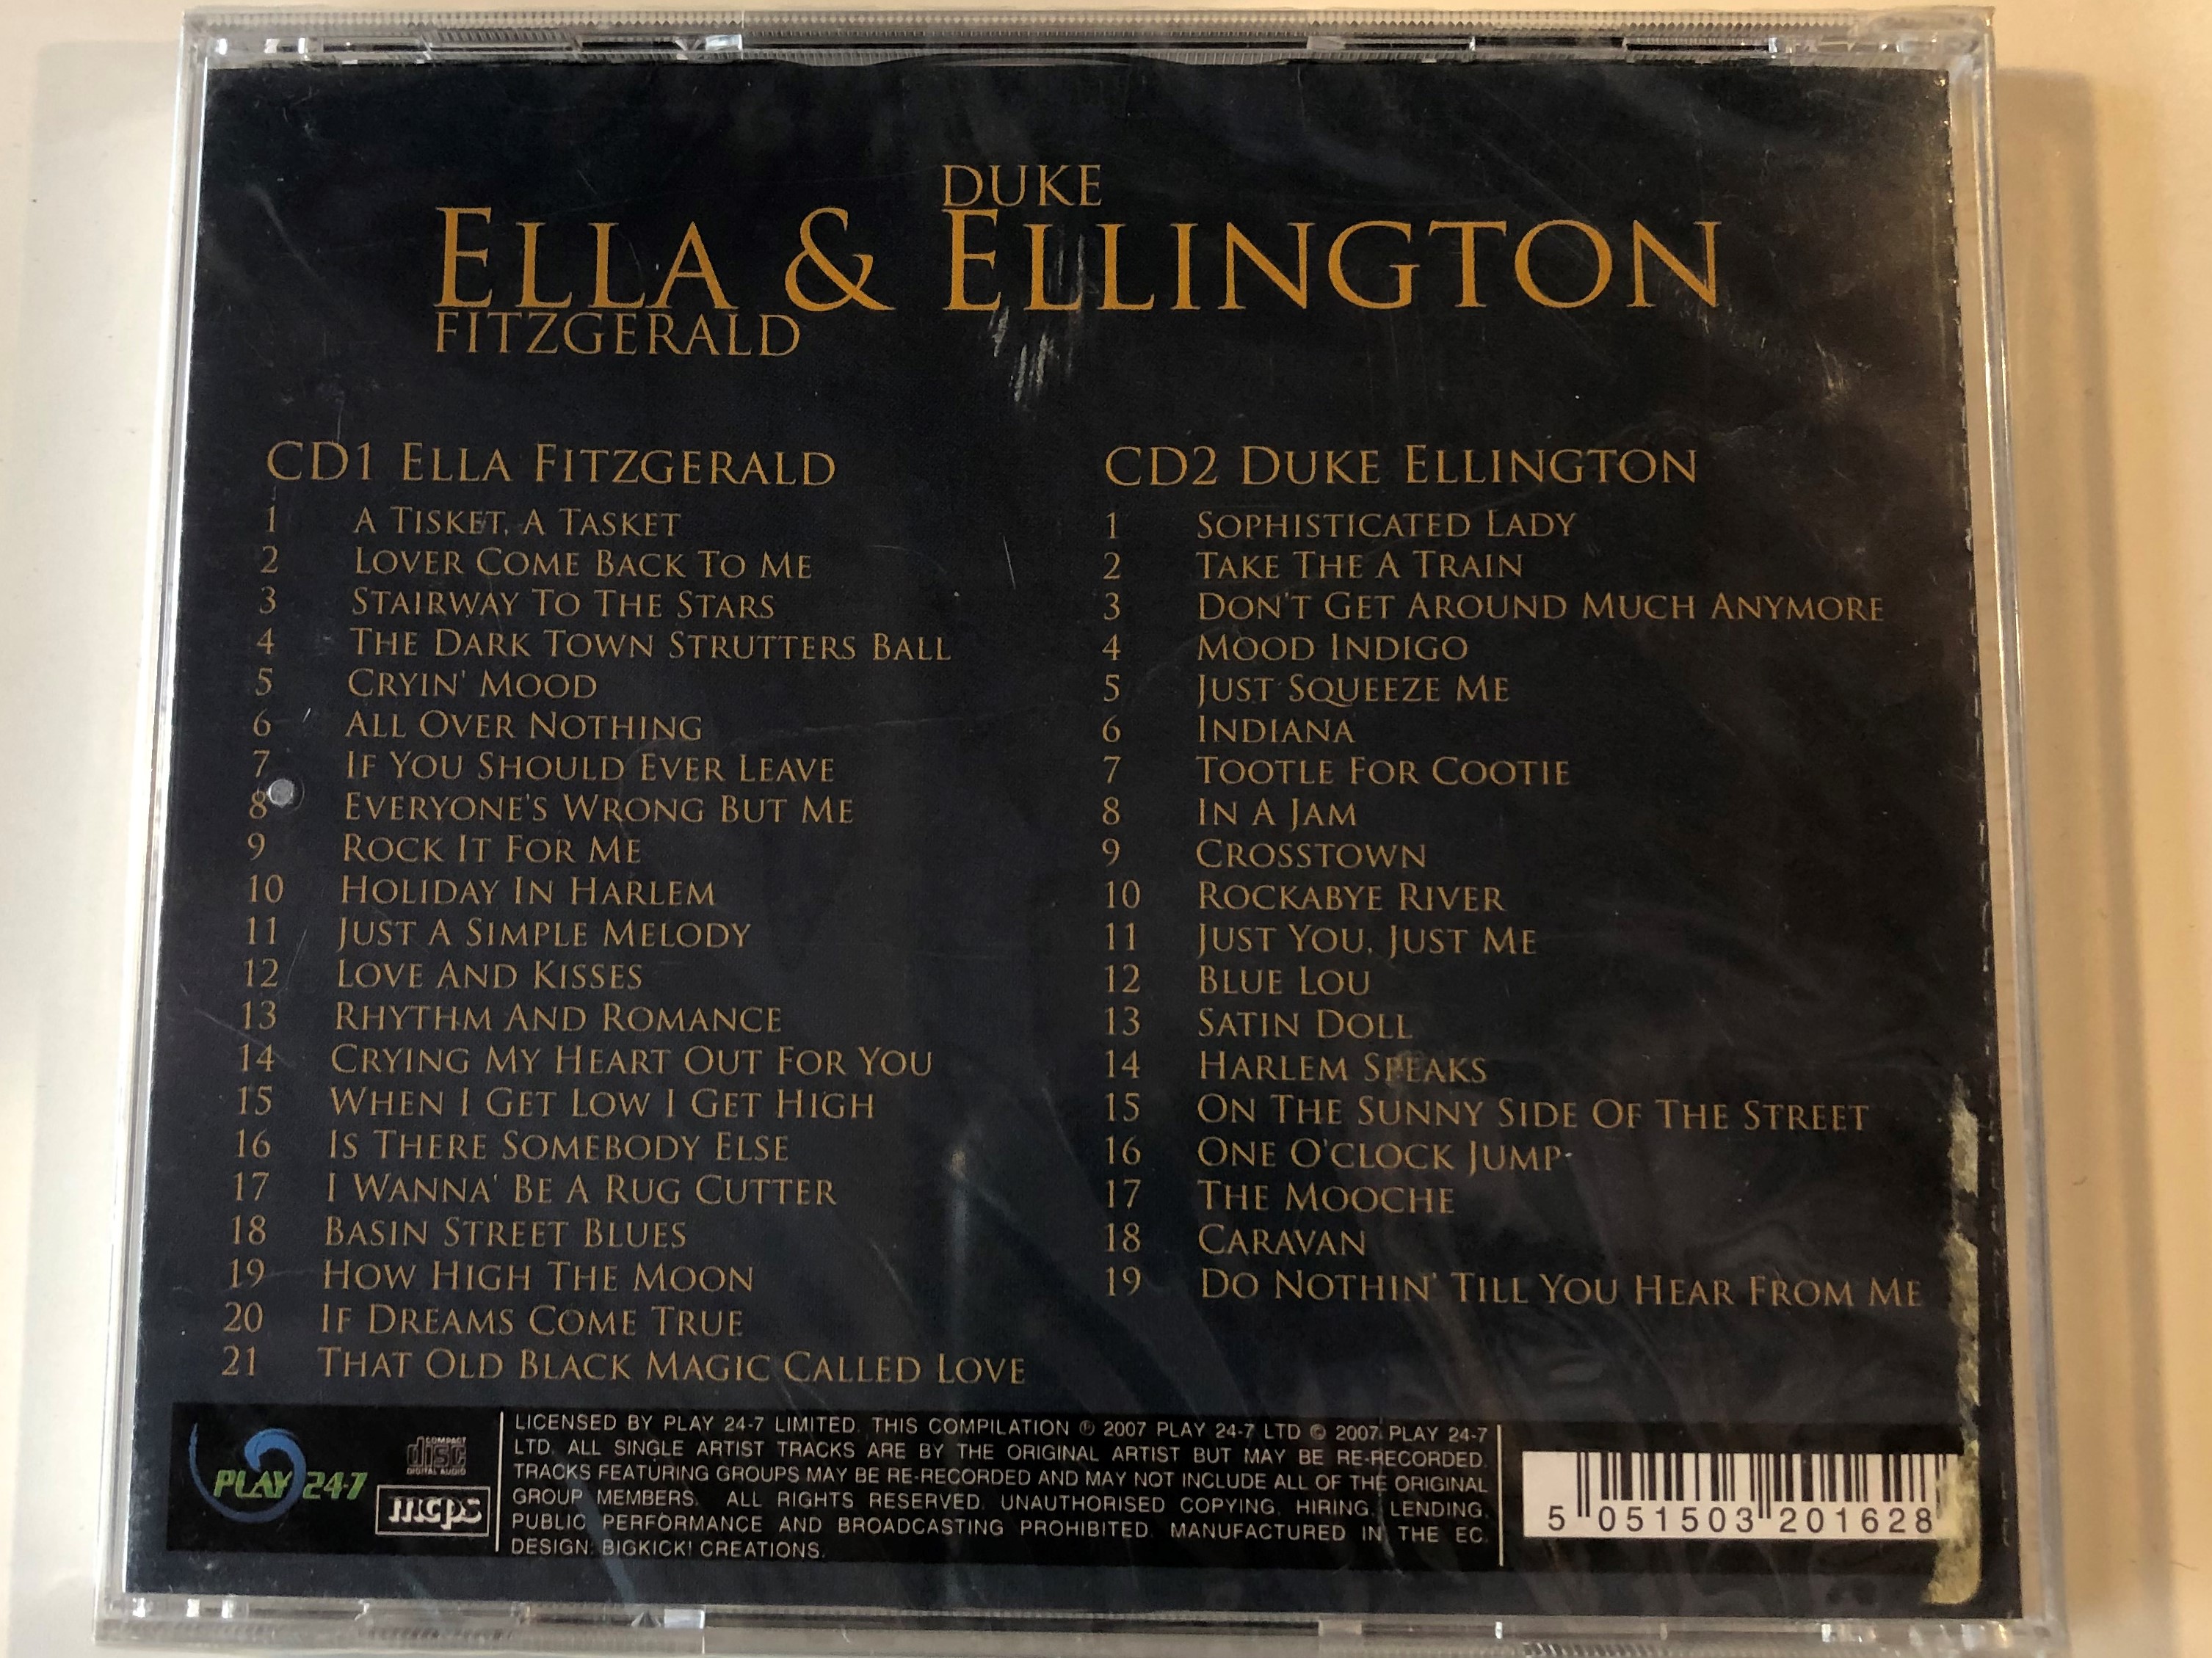 ella-ellington-2cd-collection-of-over-40-tracks-play-24-7-2x-audio-cd-2007-5051503201628-2-.jpg